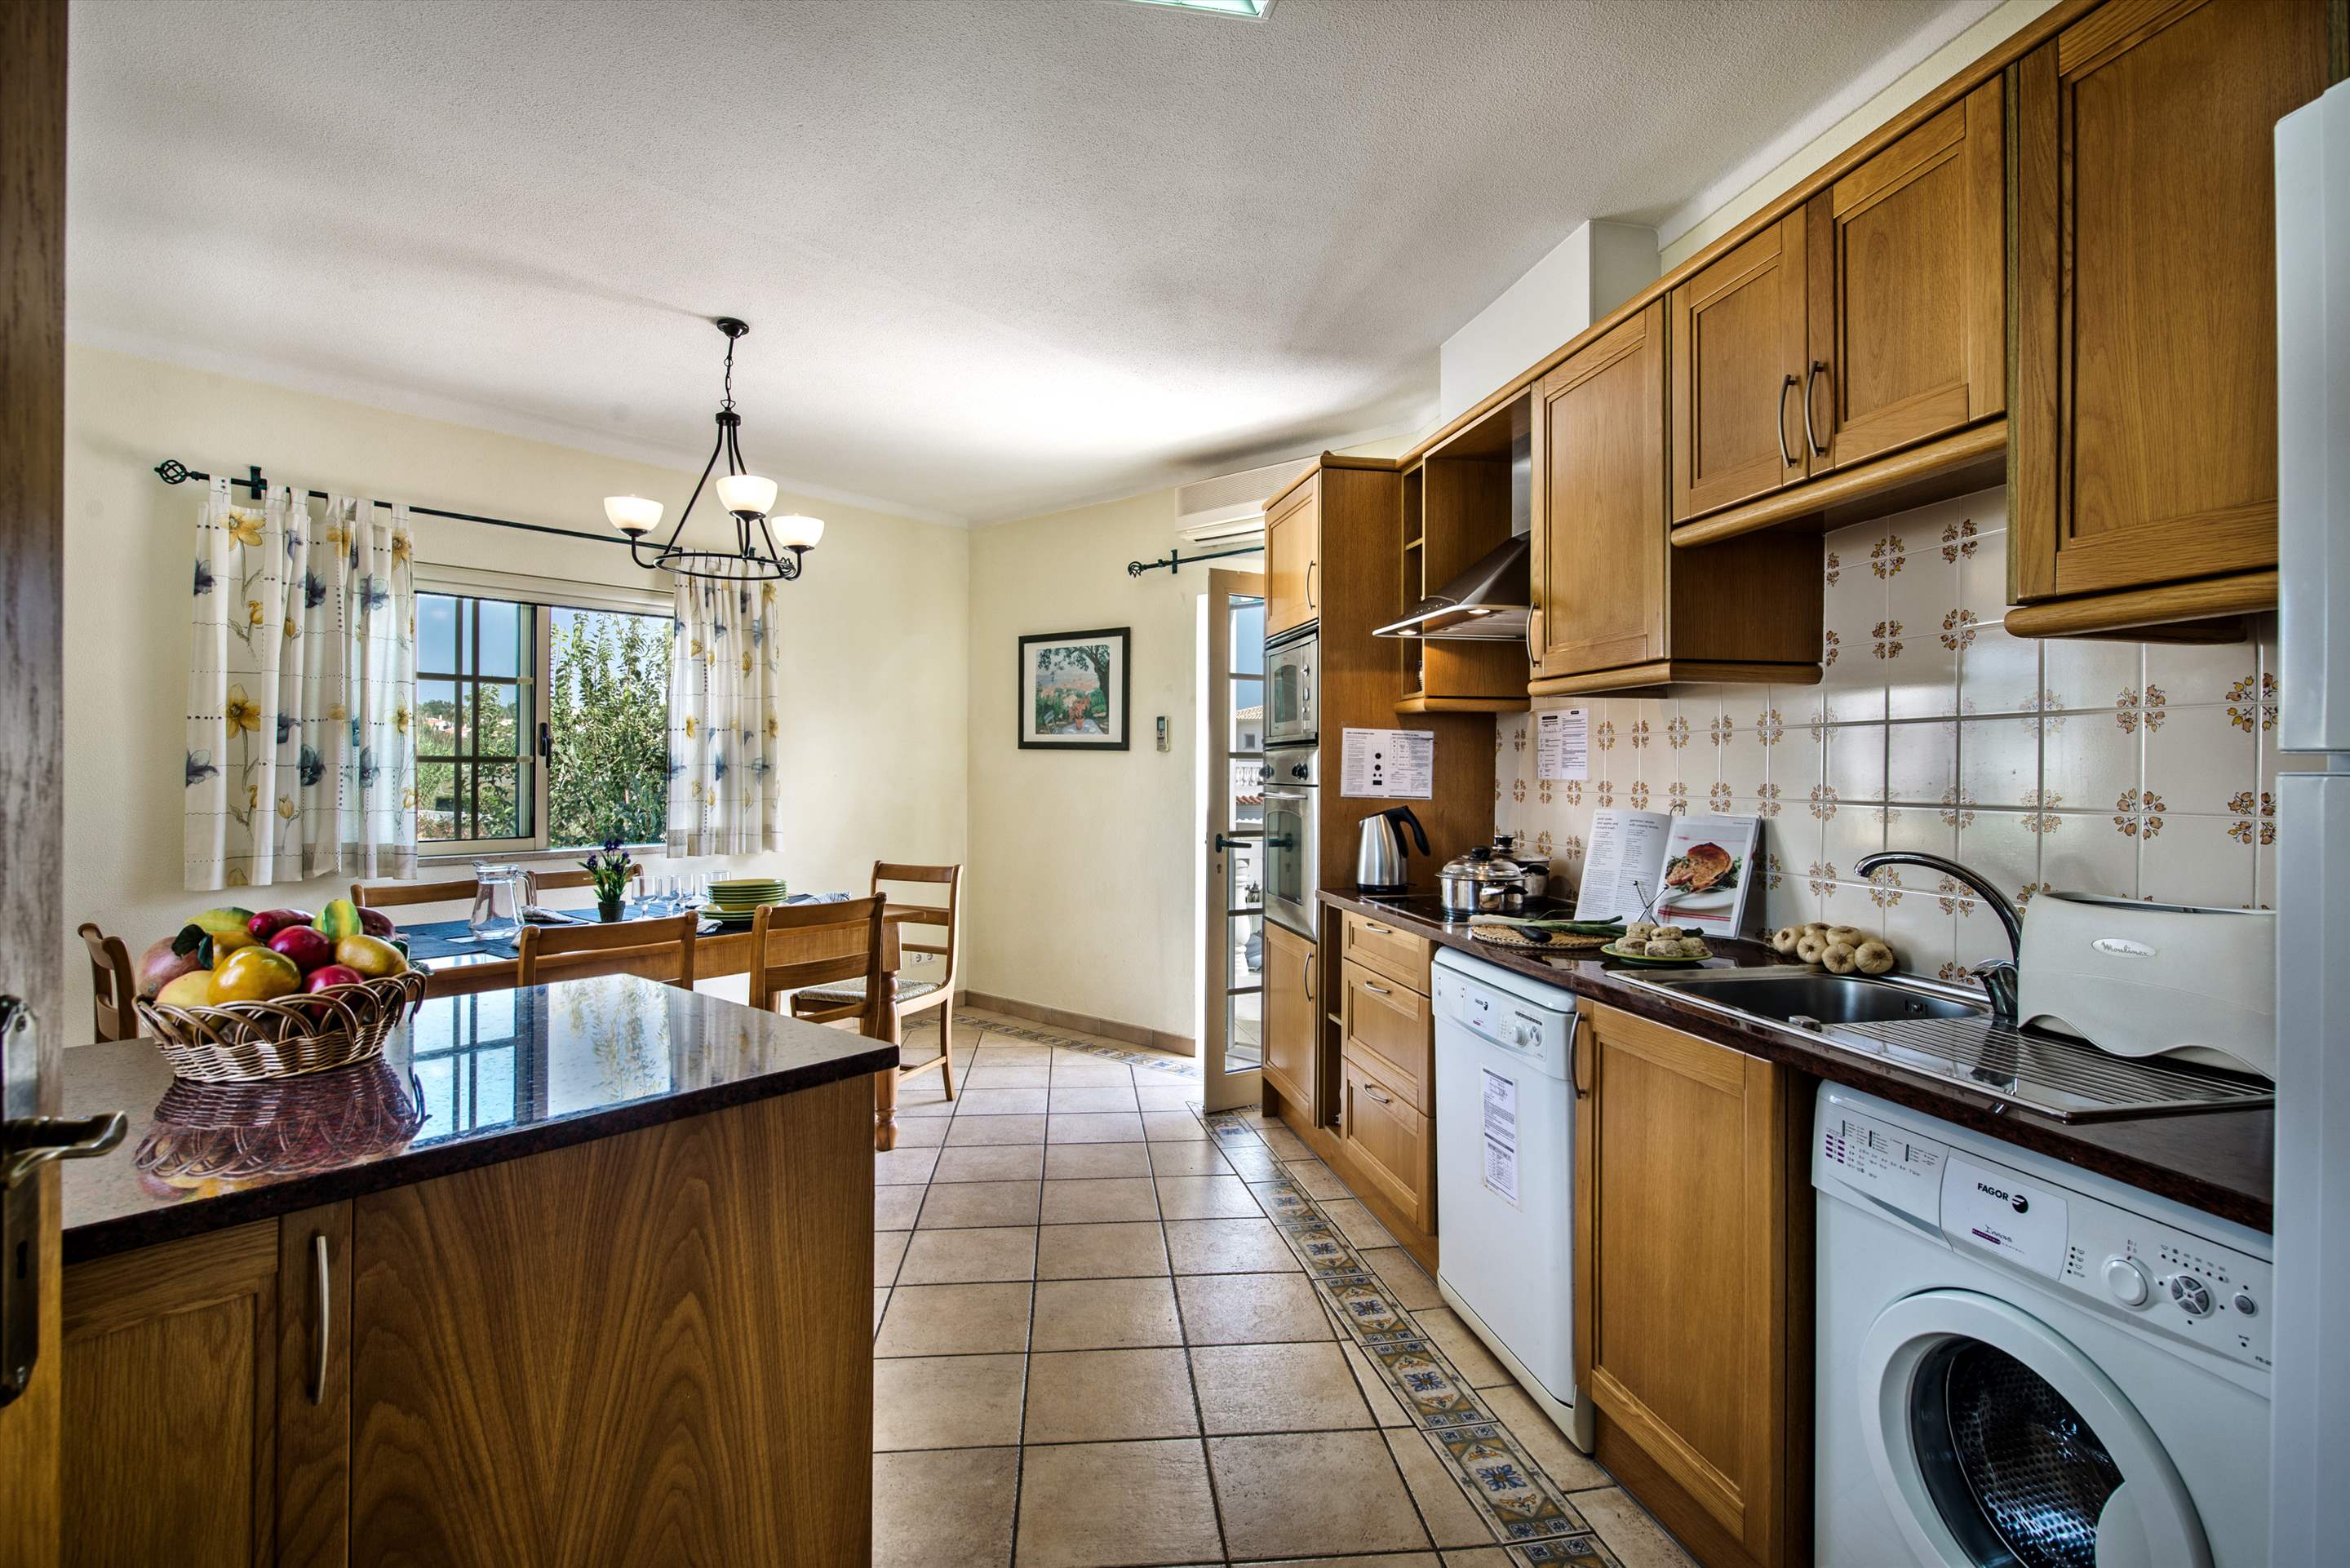 Casa Rebela, 10-11 persons rate, 6 bedroom villa in Gale, Vale da Parra and Guia, Algarve Photo #5